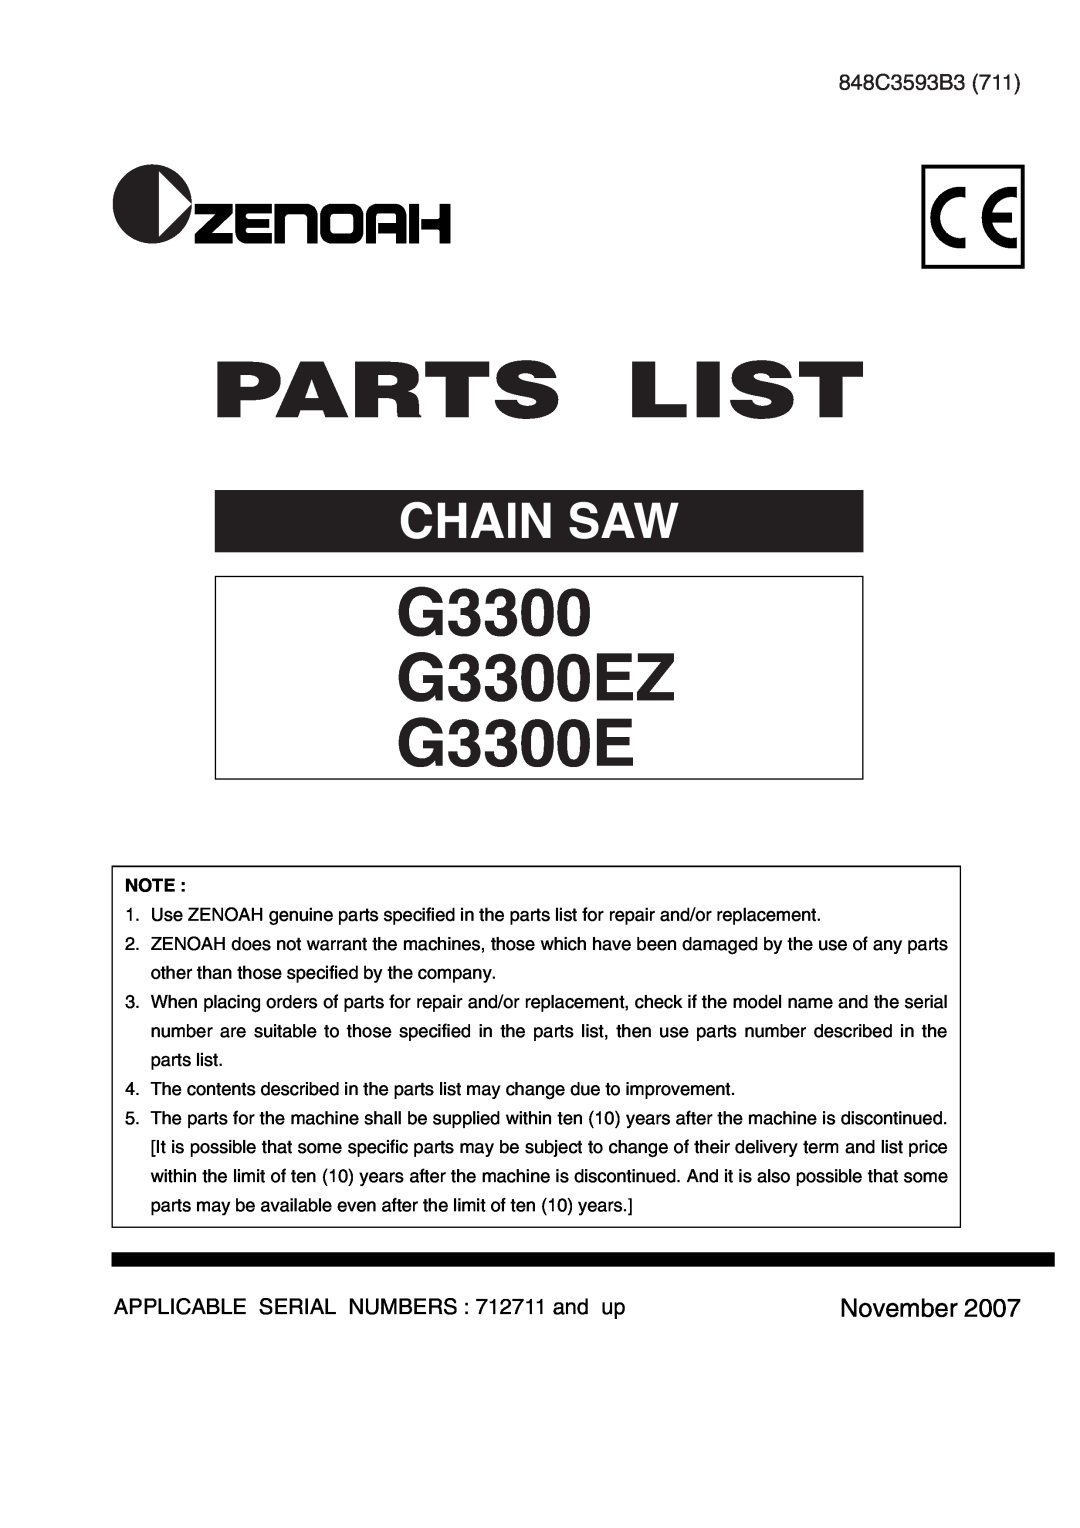 Zenoah manual Parts List, G3300 G3300EZ G3300E, Chain Saw, November, 848C3593B3 